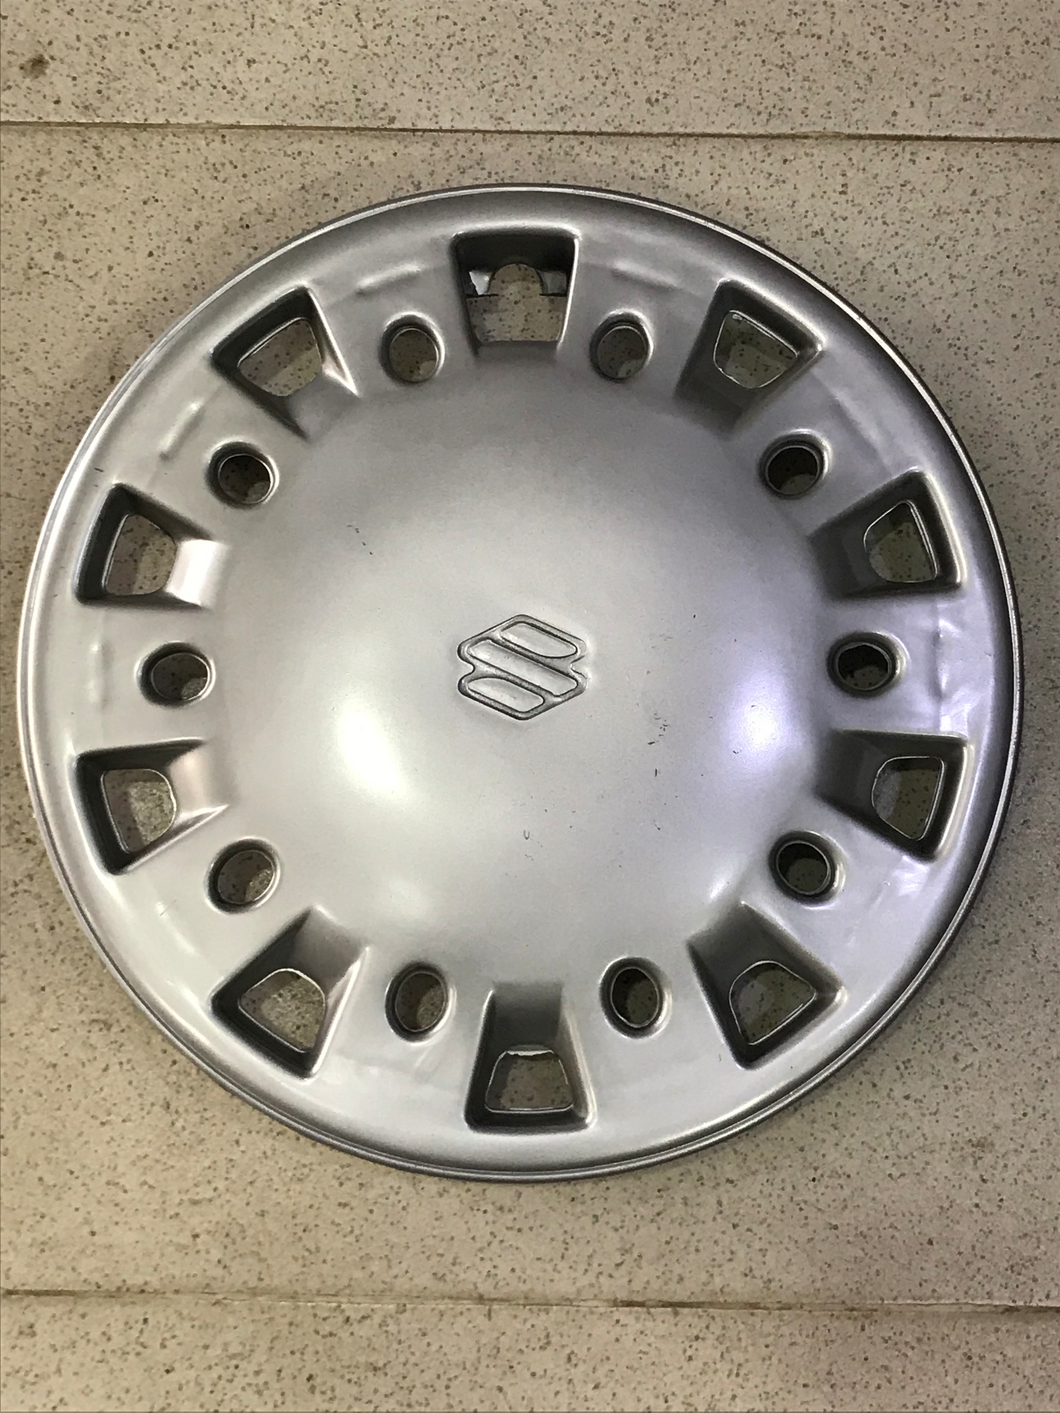 Wheel Cap 12 inch size suitable for Suzuki Alto 1000 cc